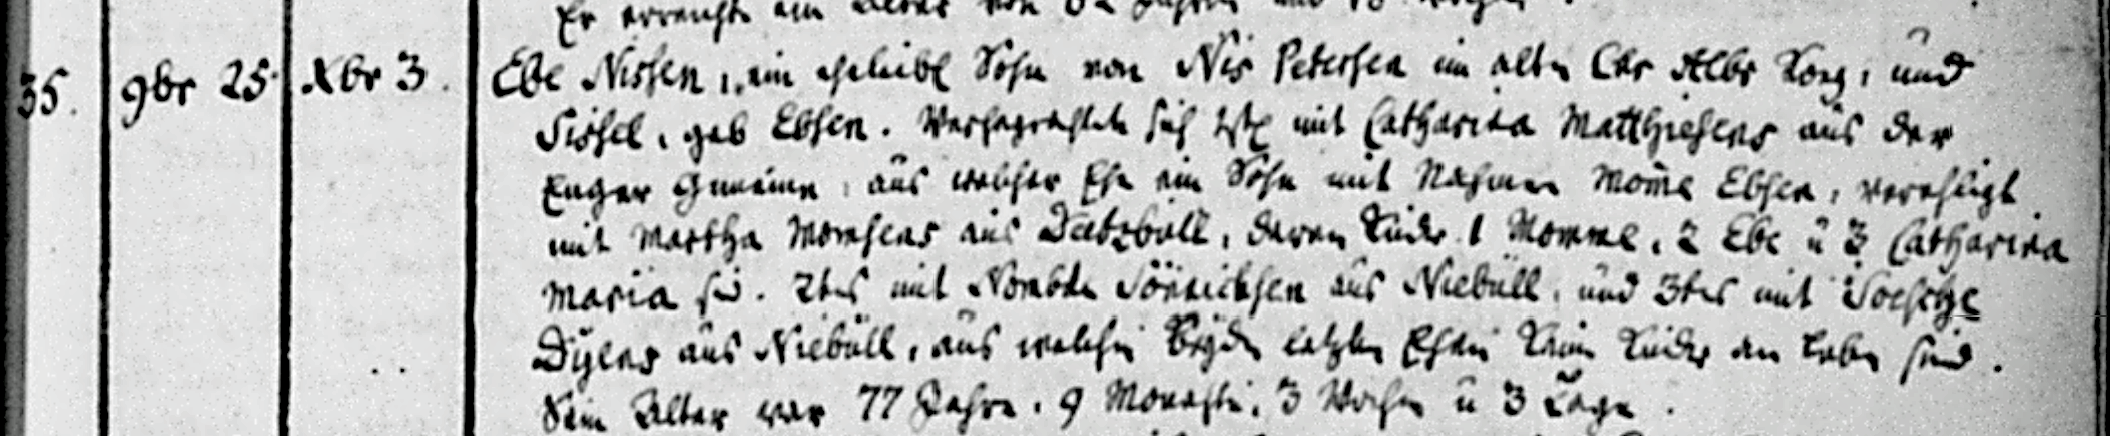 Ebe Nissen death record, 1786